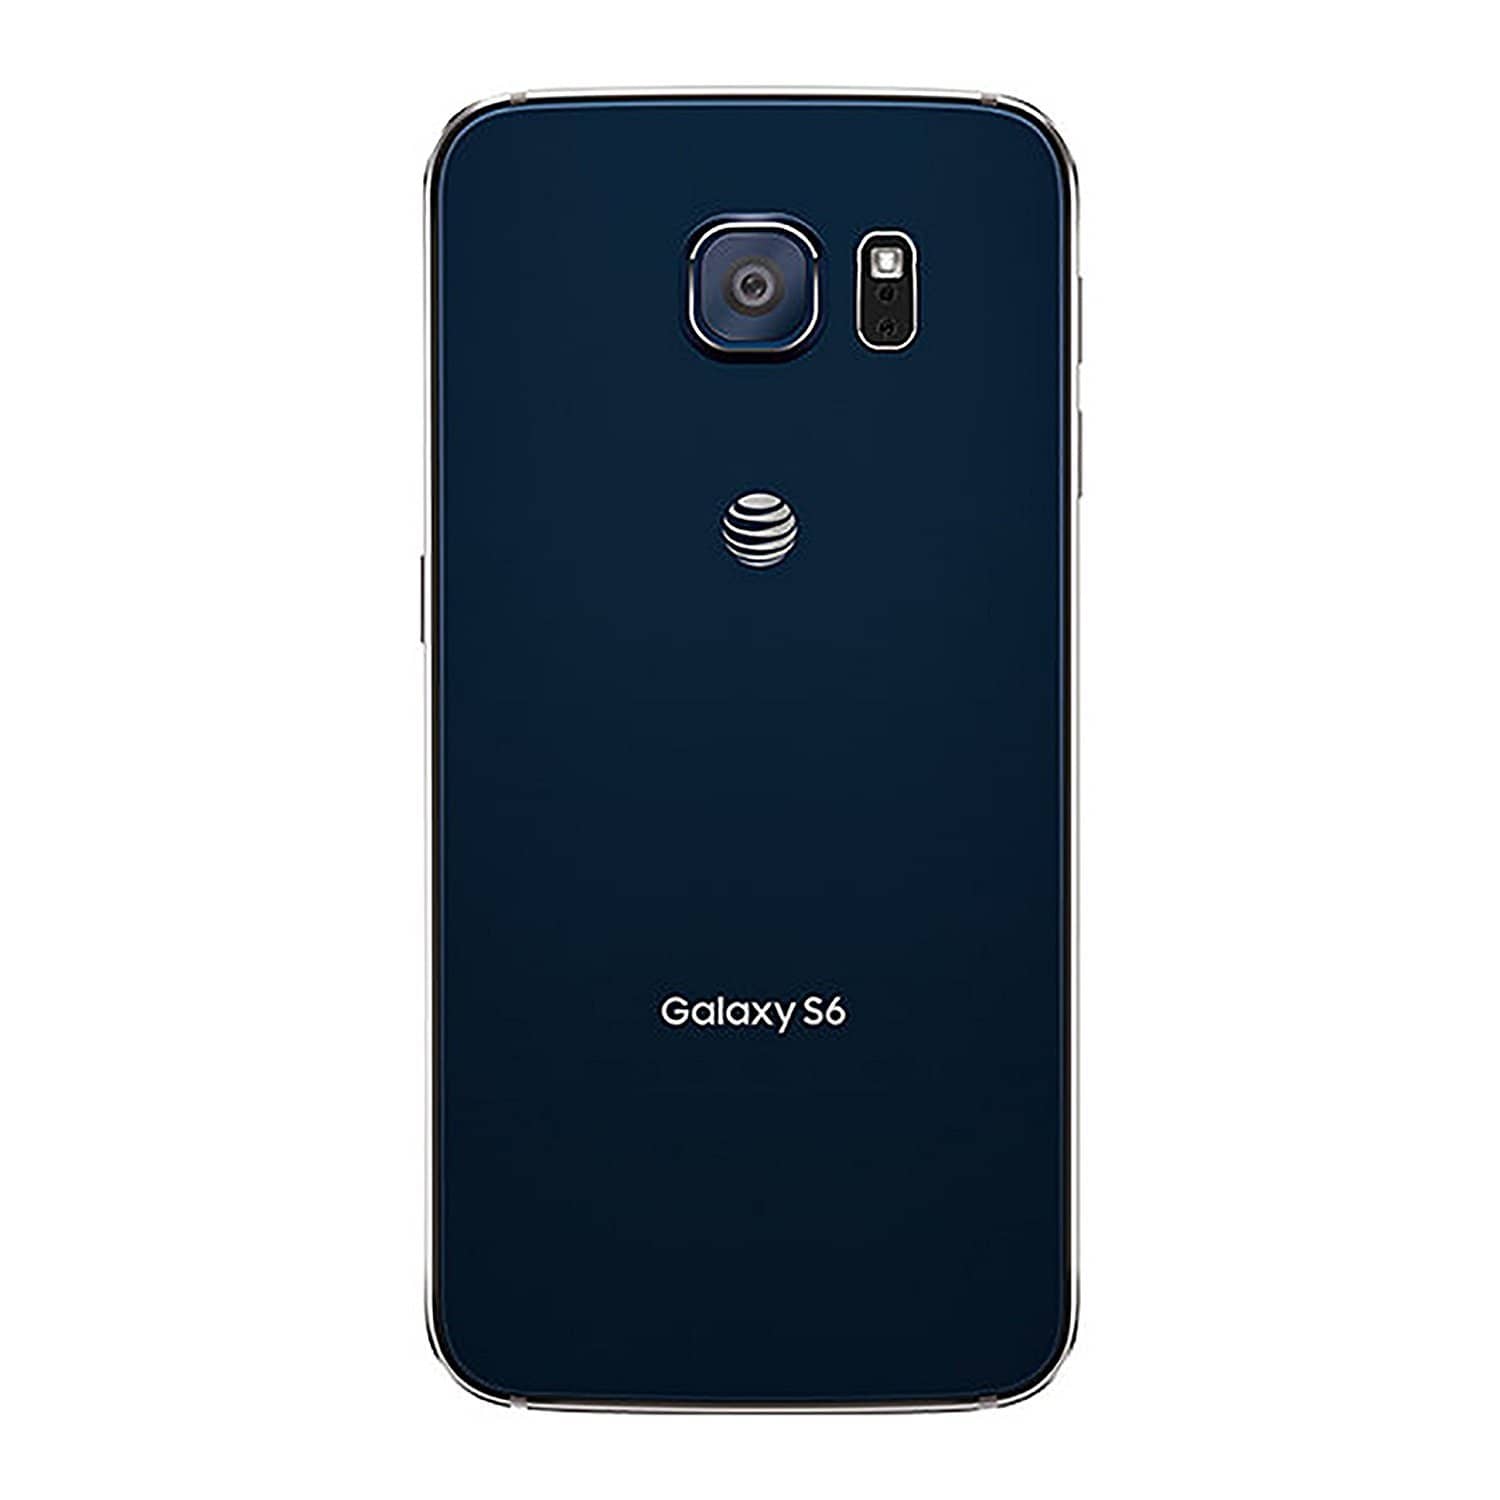 Samsung Galaxy S6 G920A 32GB Unlocked GSM 4G LTE - Black Sapphire